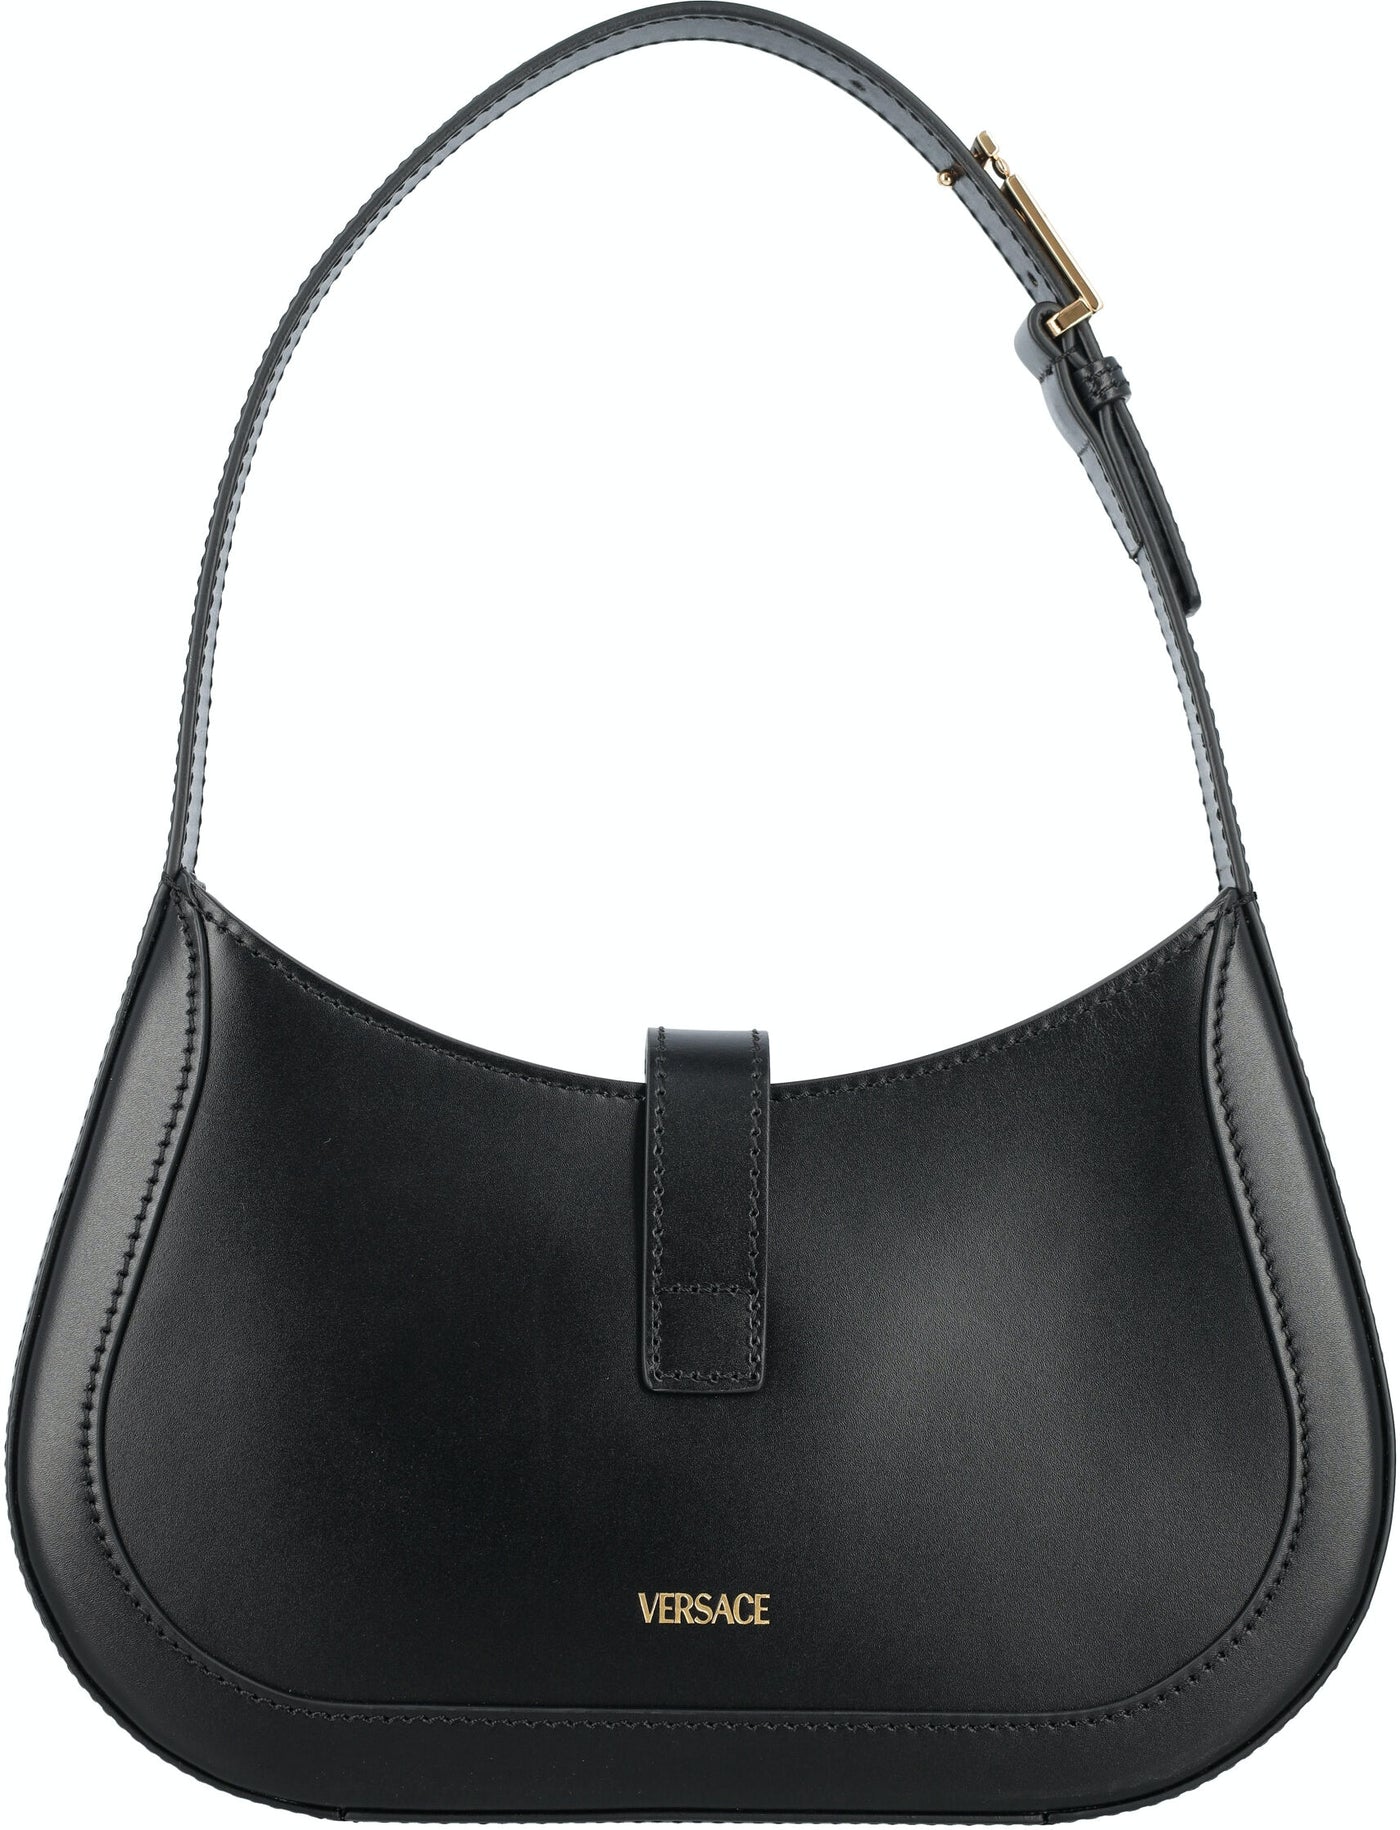 My New Versace Greca Goddess Bag! : r/handbags